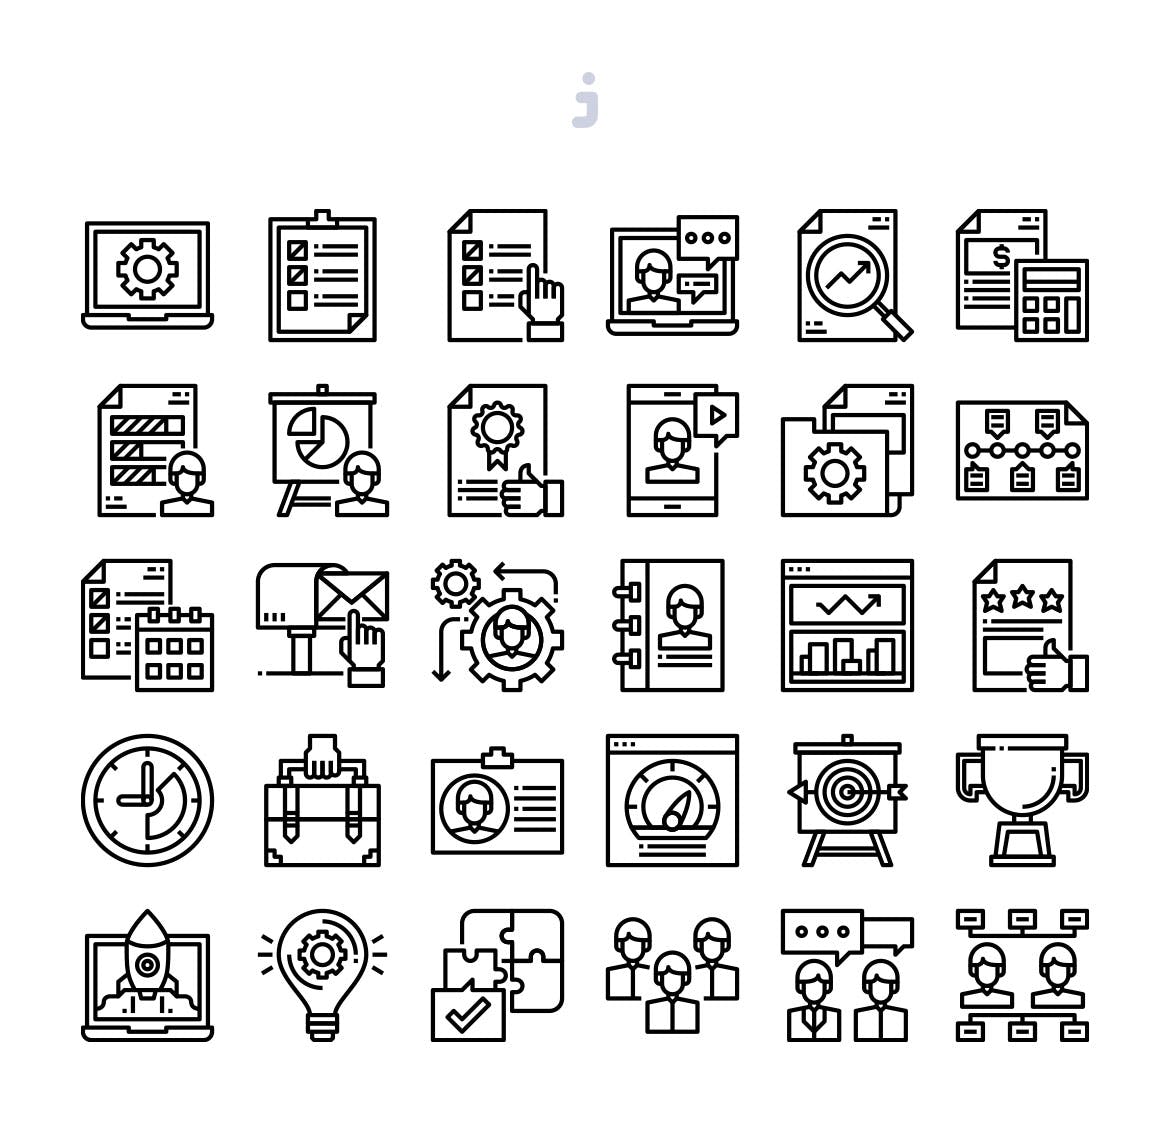 30枚项目管理主题彩色矢量图标素材 30 Project Management Icons插图(2)